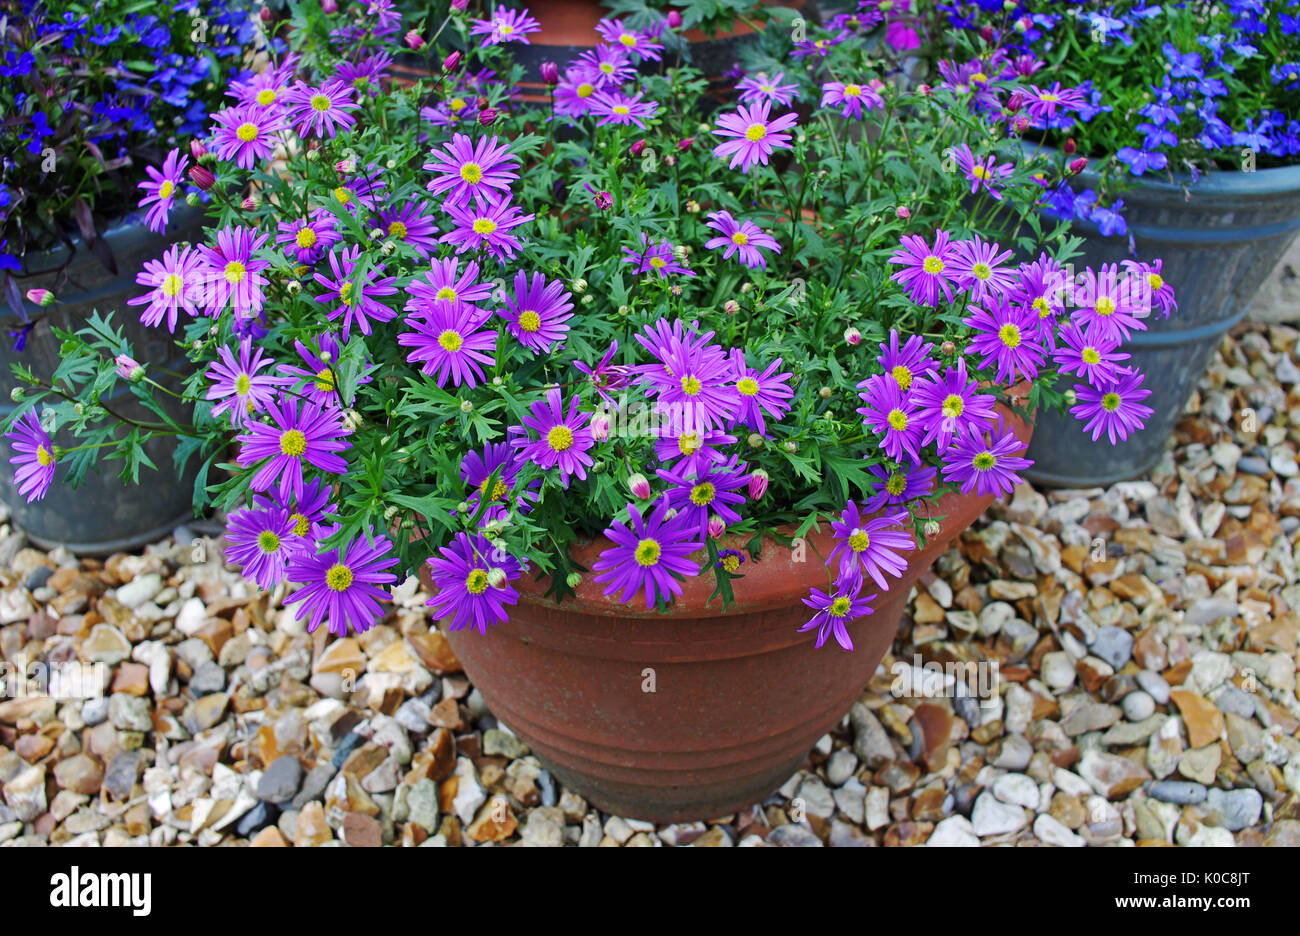 Summer flowering plants purple brachyscome and blue lobelia in pots on ornamental gravel patio. Stock Photo